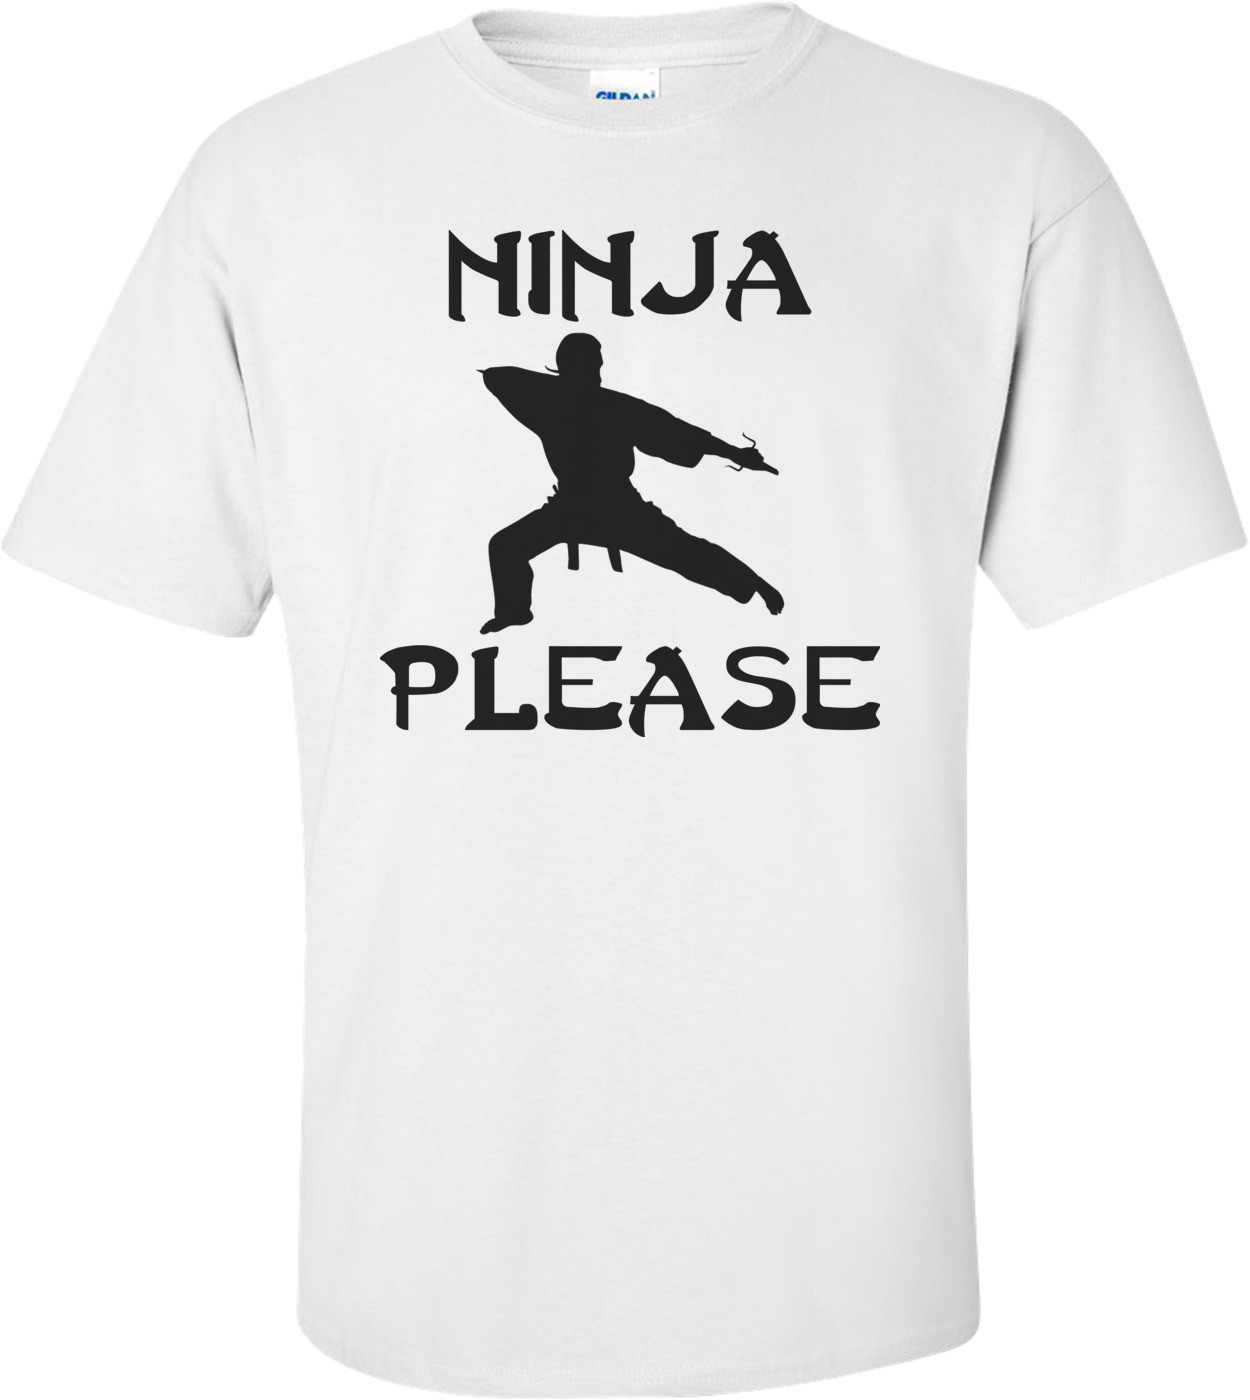 Ninja Please Shirt